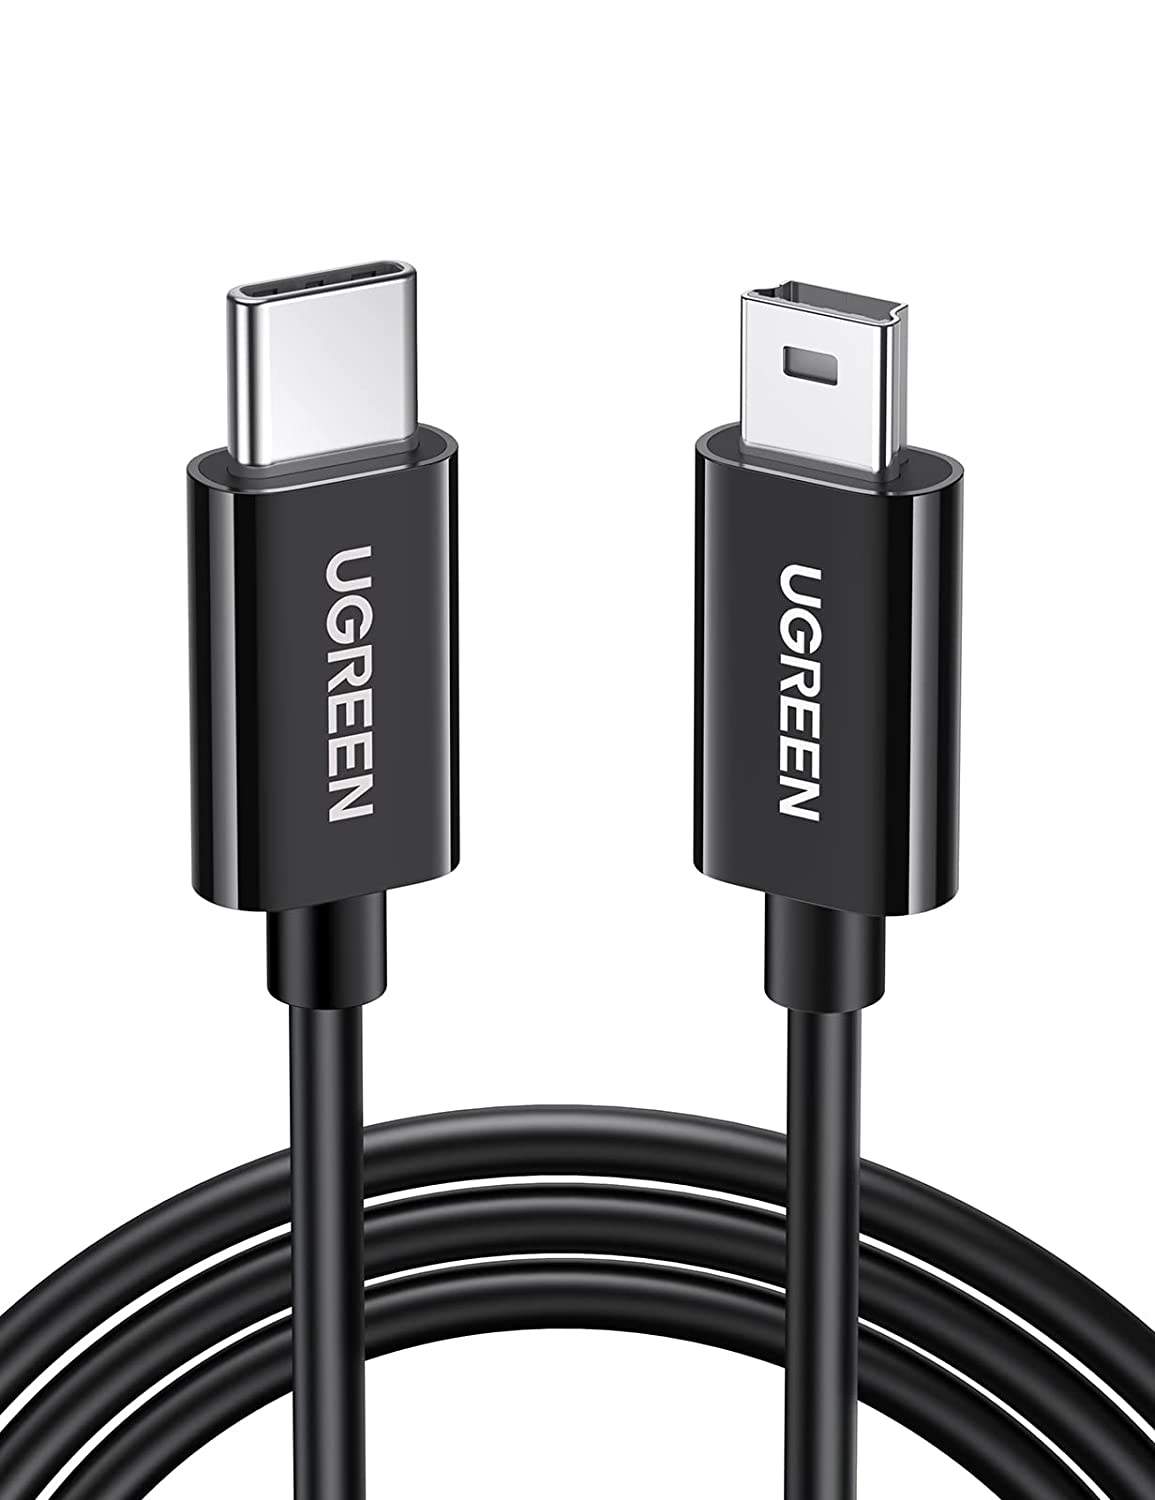 UGREEN USB C to Mini USB Cable for Digital Camera, MP3 Player and More Mini B USB Devices -50445 (Black) - Hatke